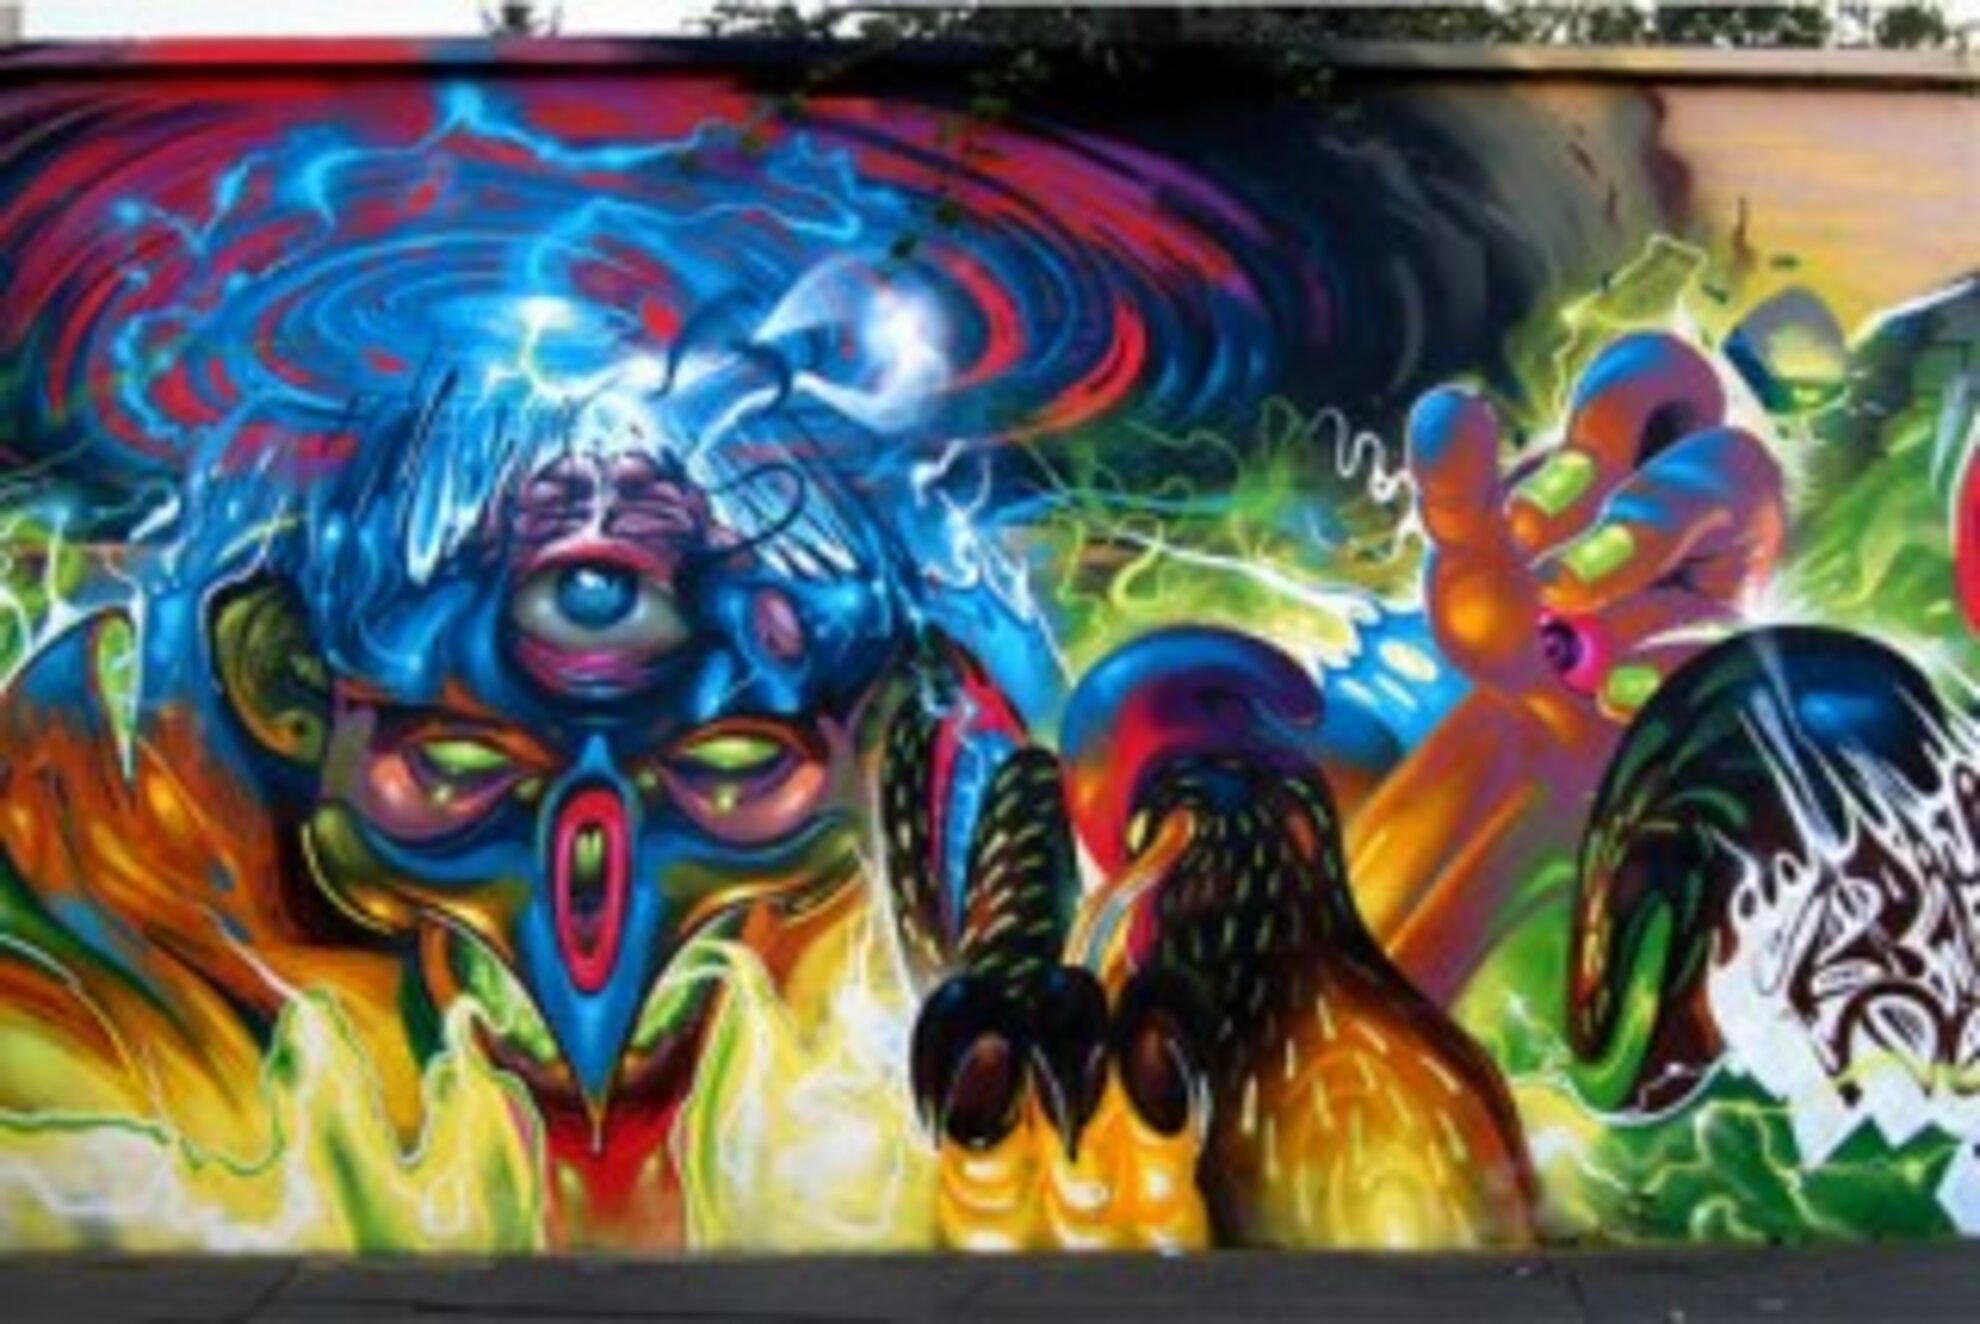 “Ez valamiféle post-graffiti” Urban Tactics interjú